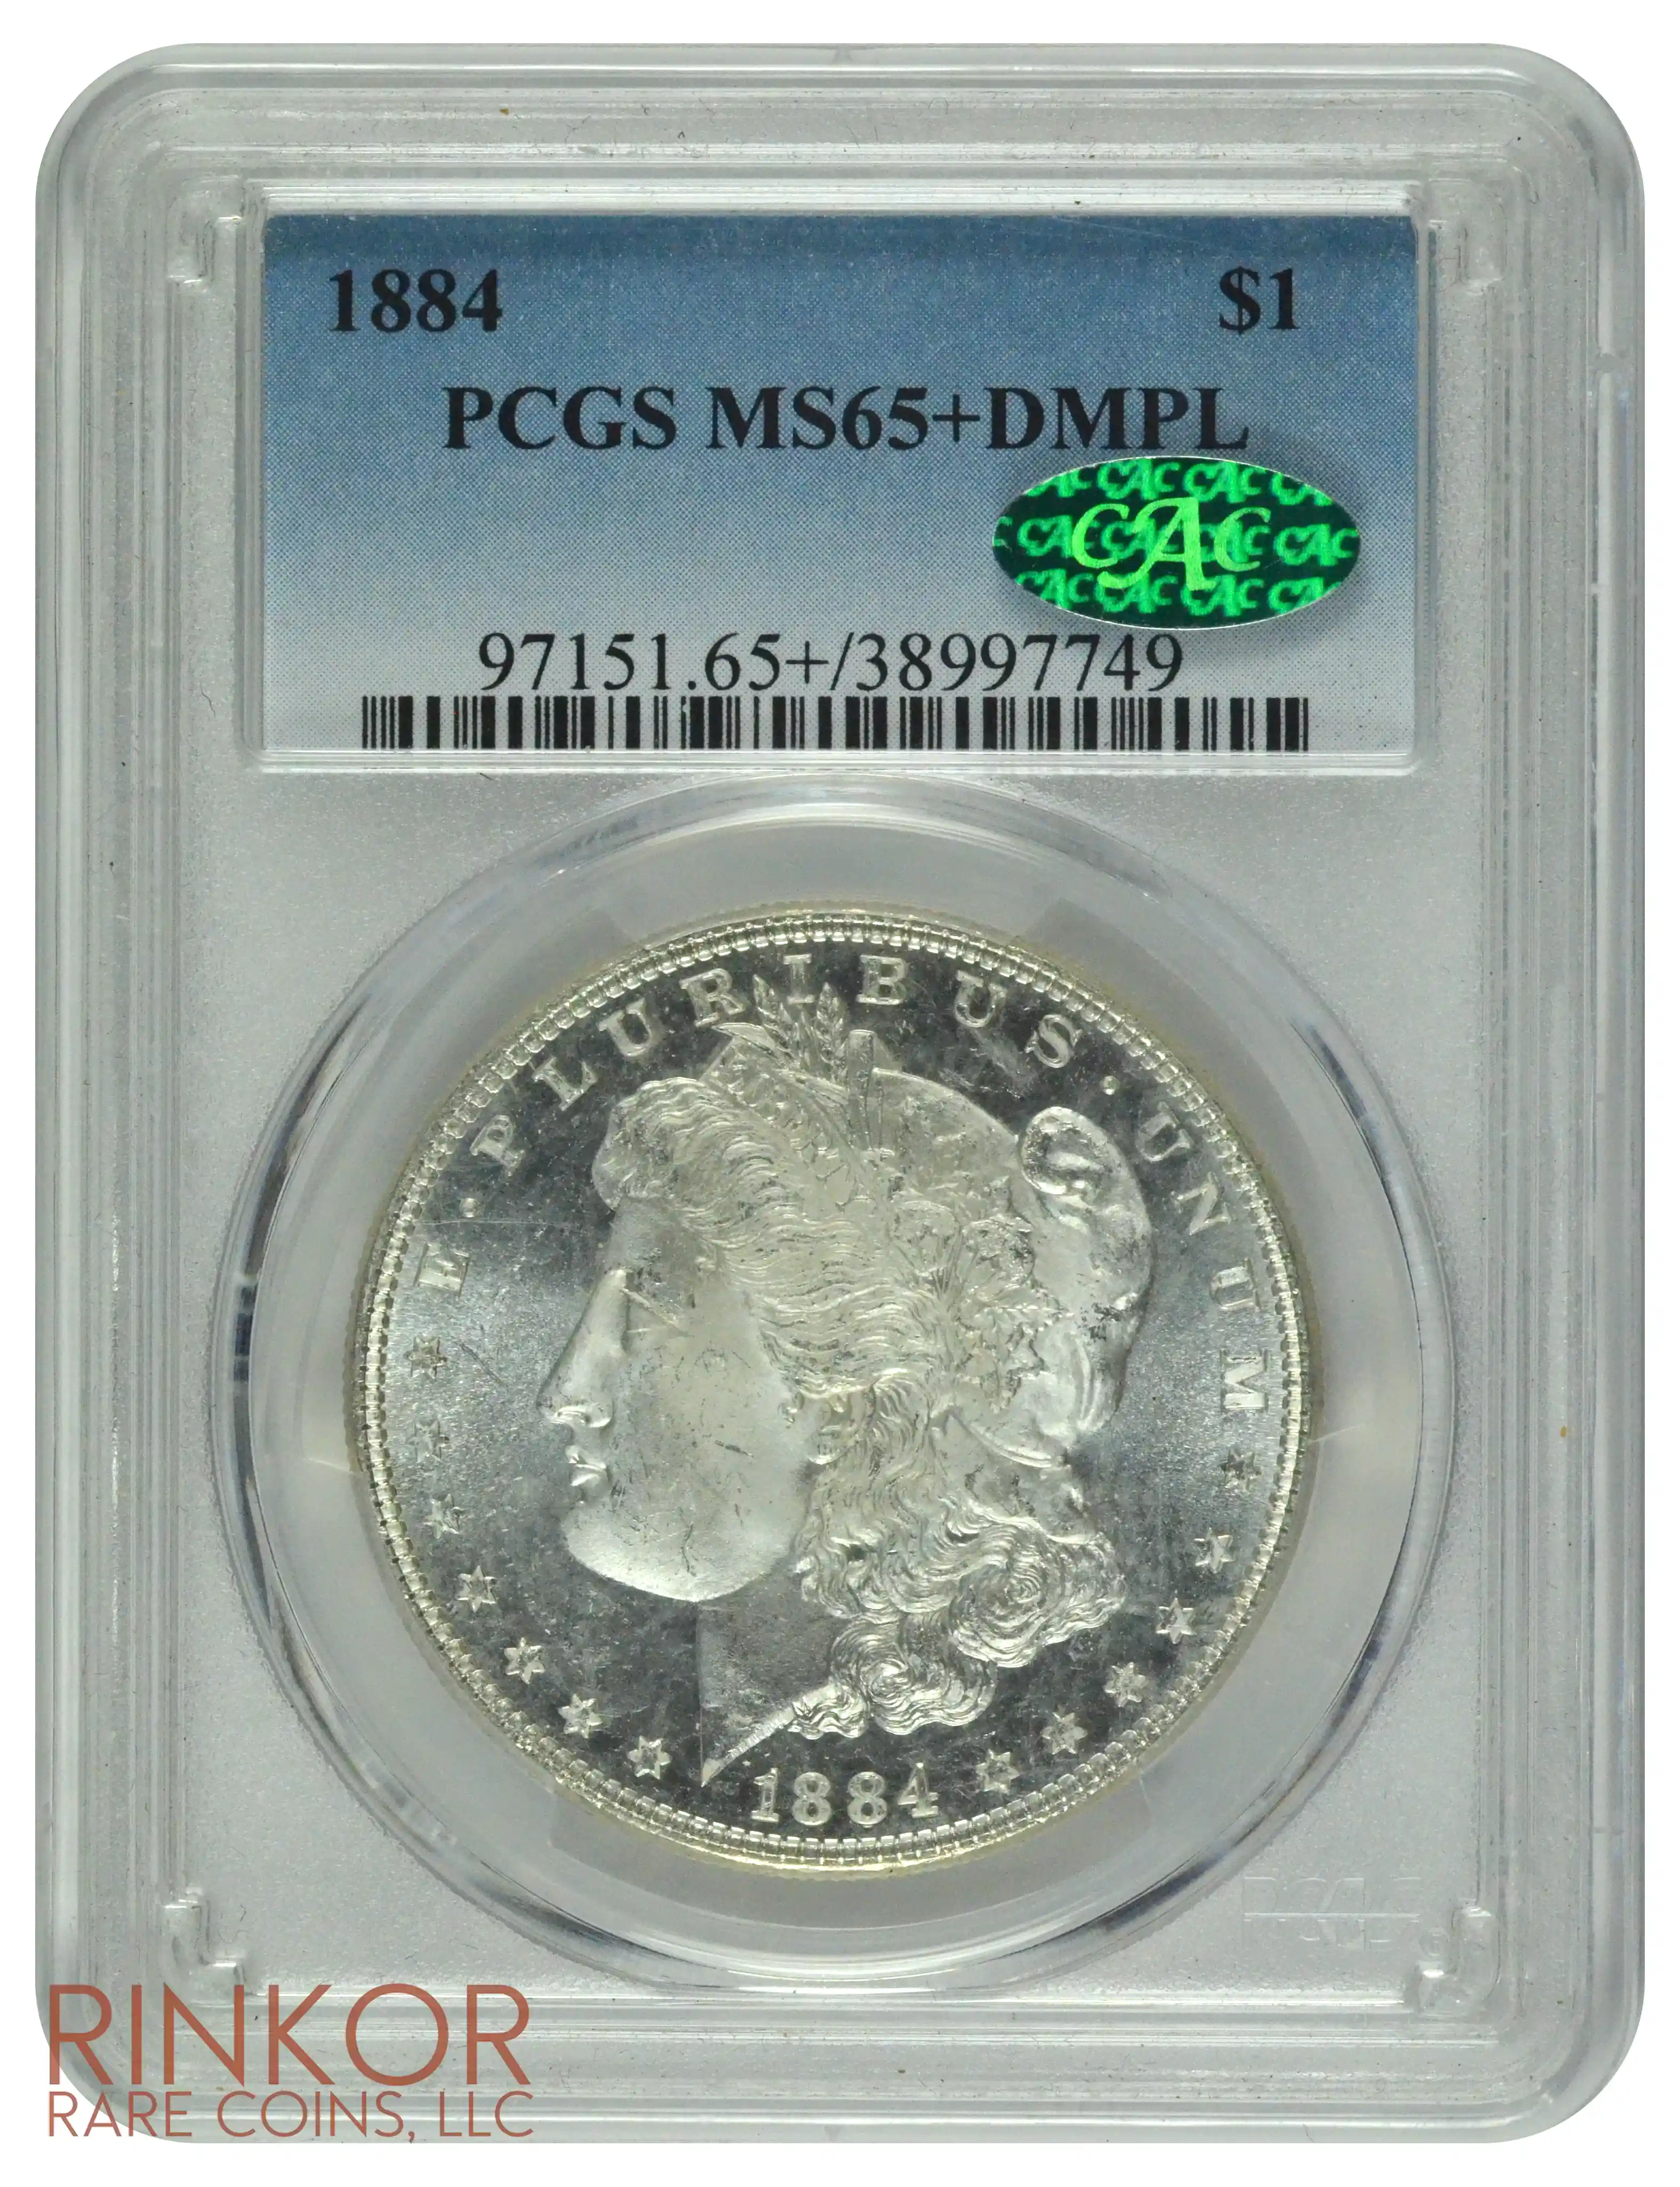 1884 $1 PCGS MS 65+ DMPL CAC